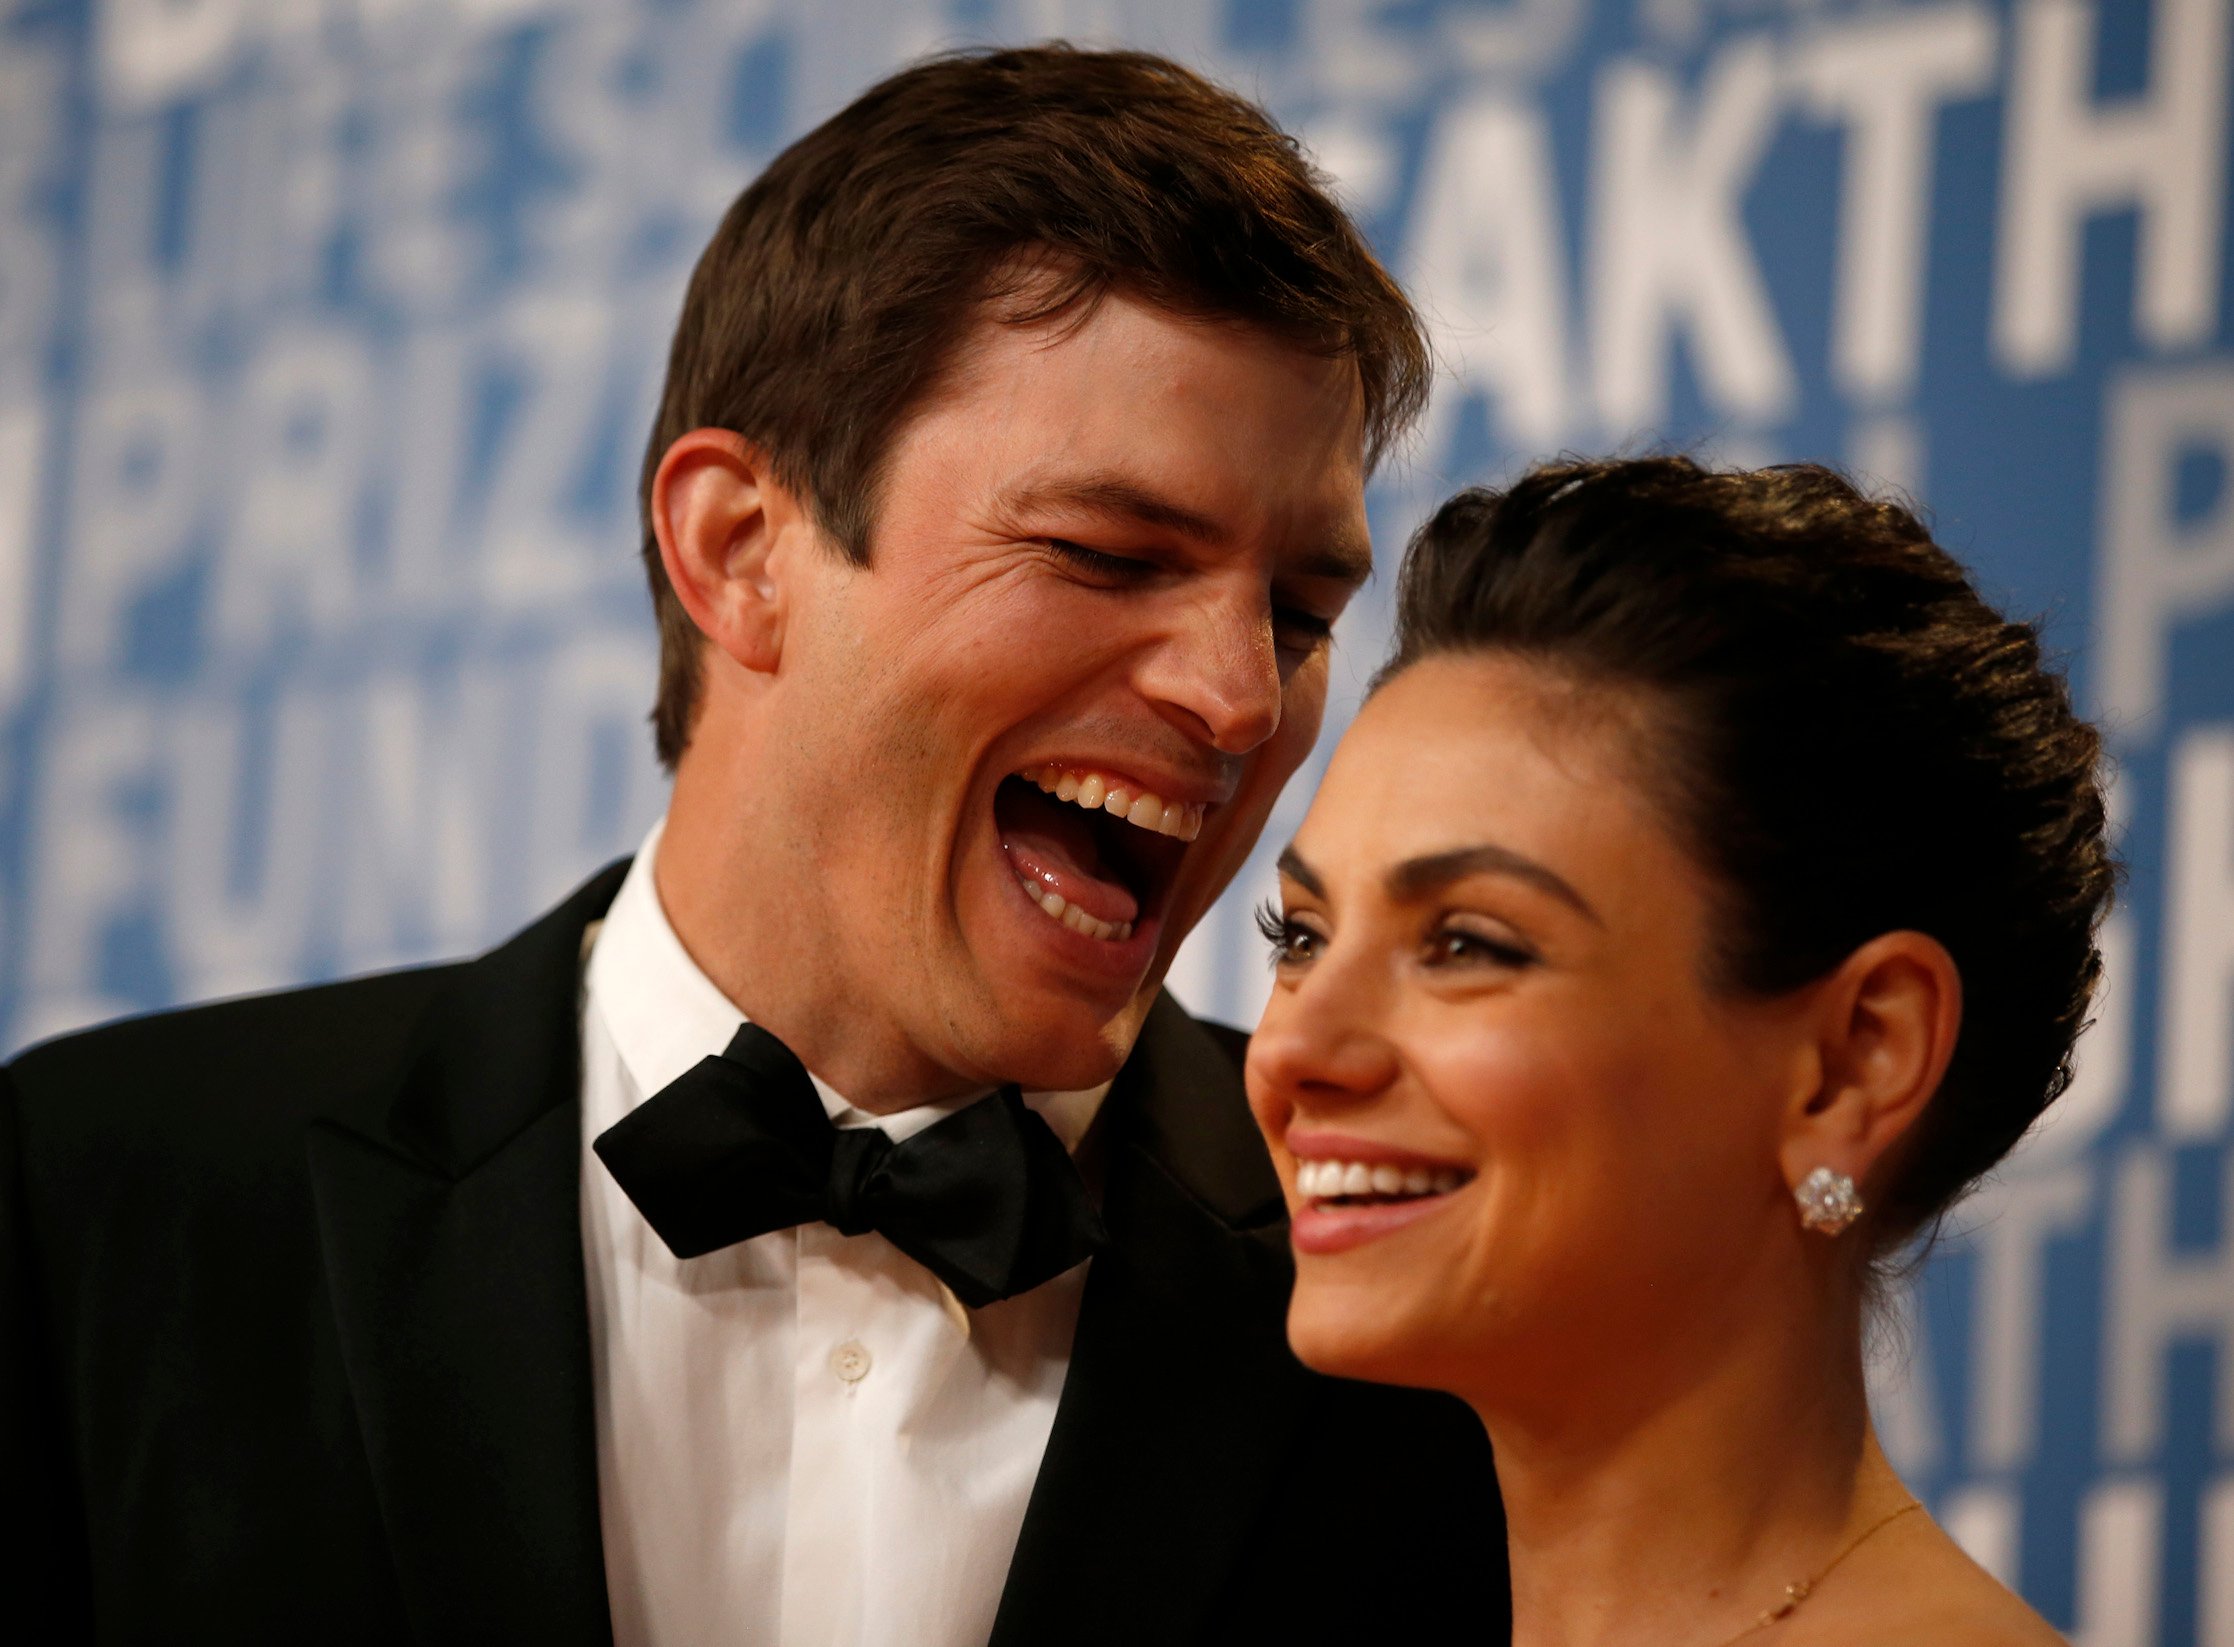 Ashton Kutcher laughs with his wife, actor Mila Kunis